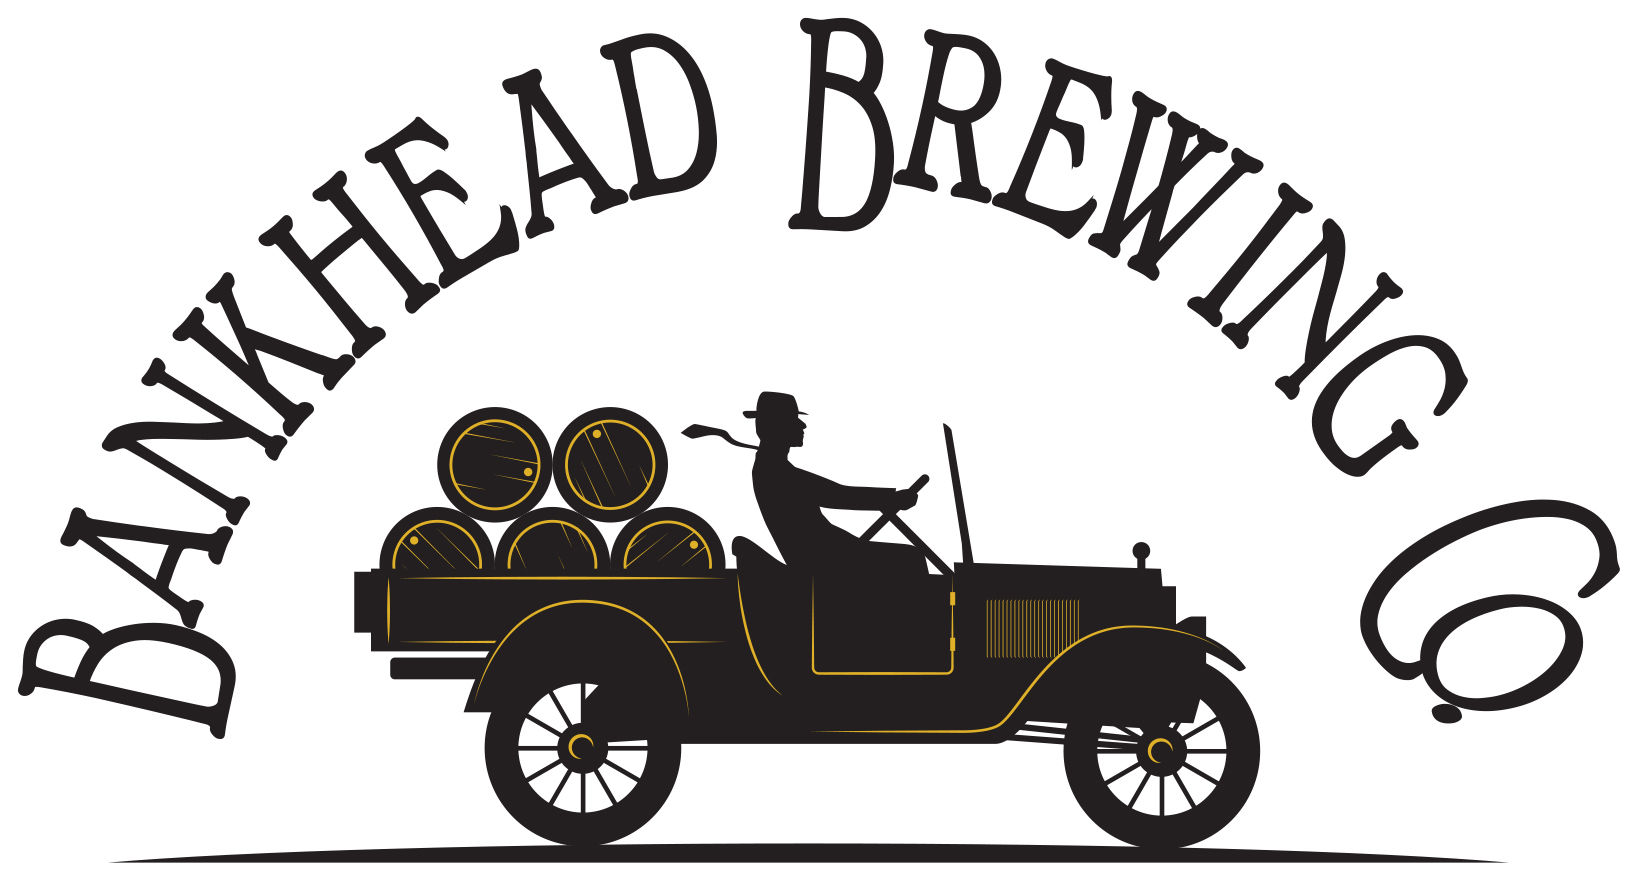 Bankhead Brewing Company logo